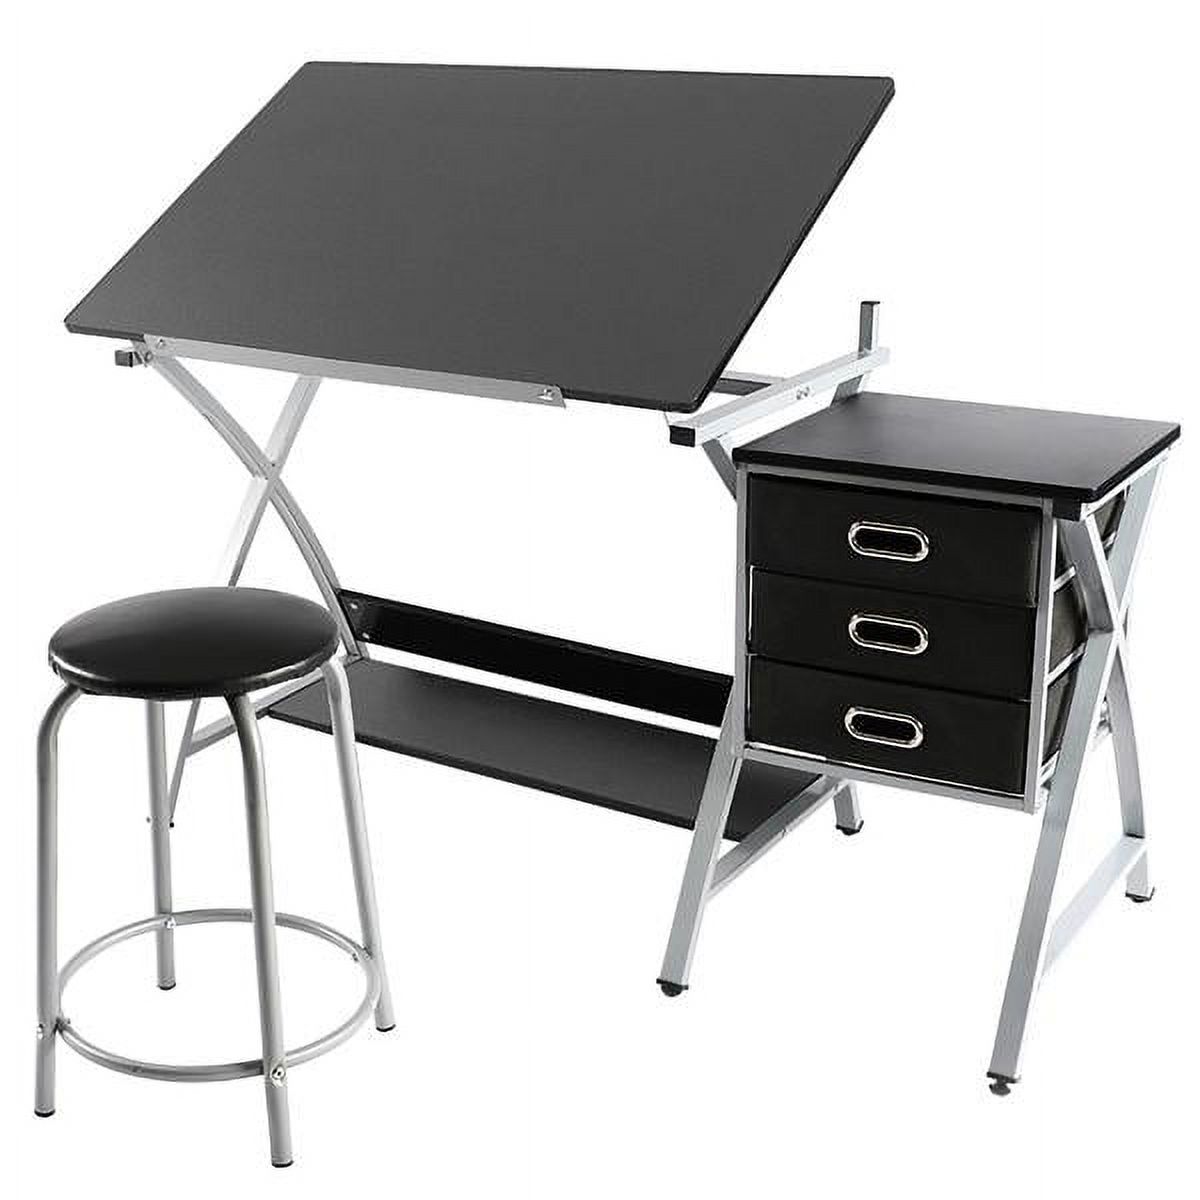 Alden Design Adjustable Steel Drafting Table with Stool, Black - image 1 of 13